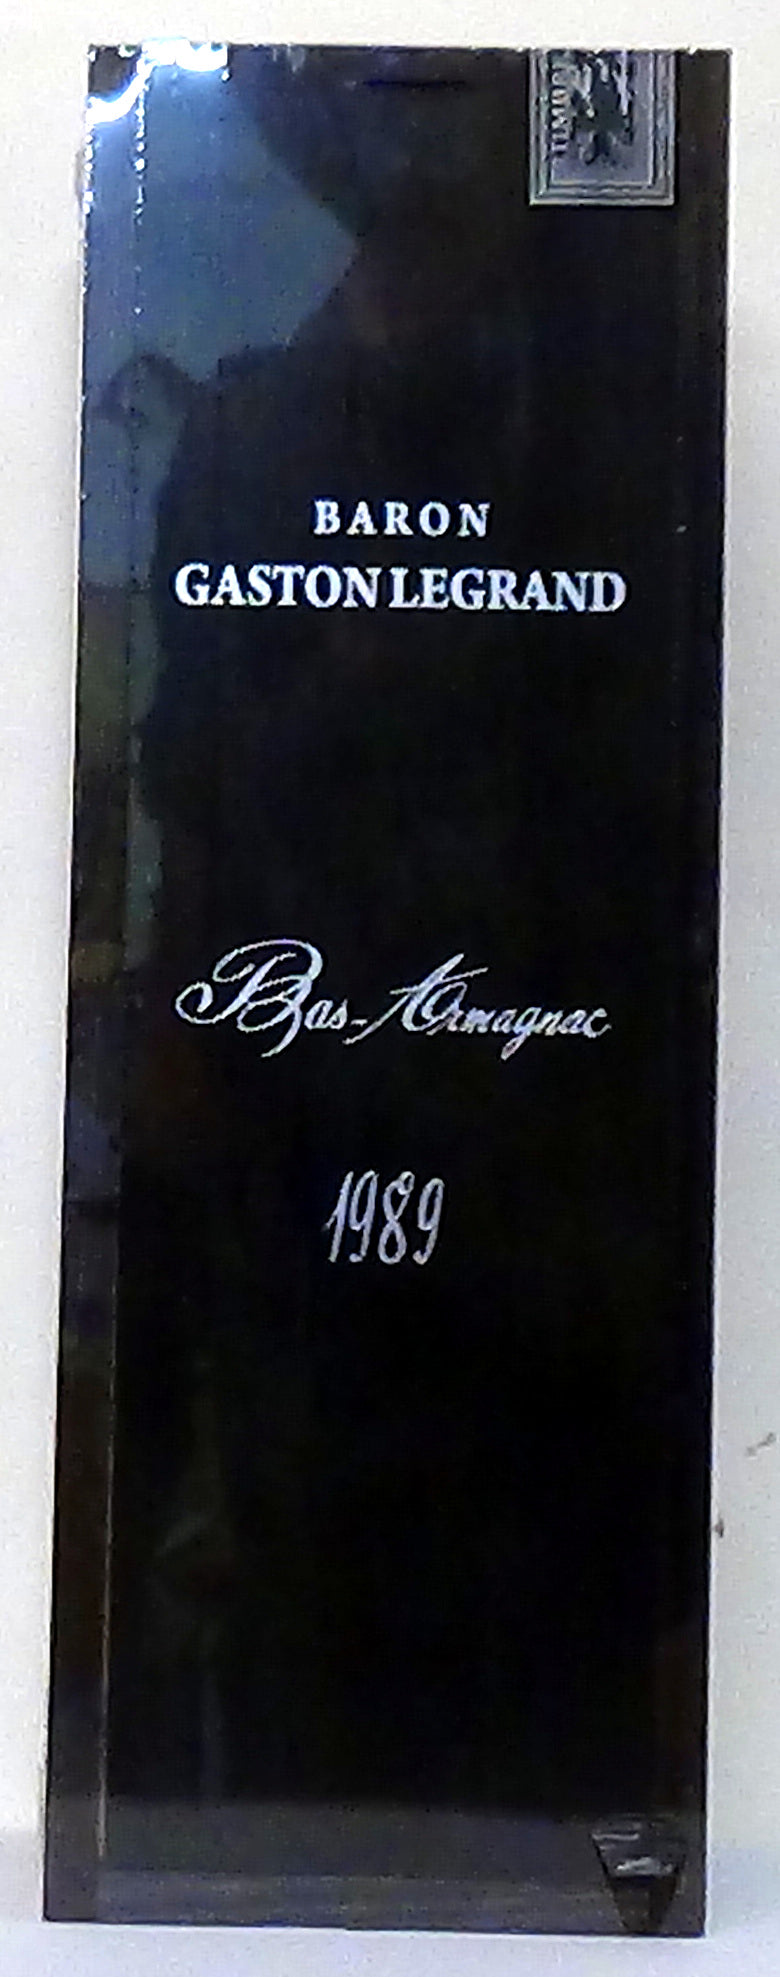 1989 Baron Gaston Legrand Bas Armagnac